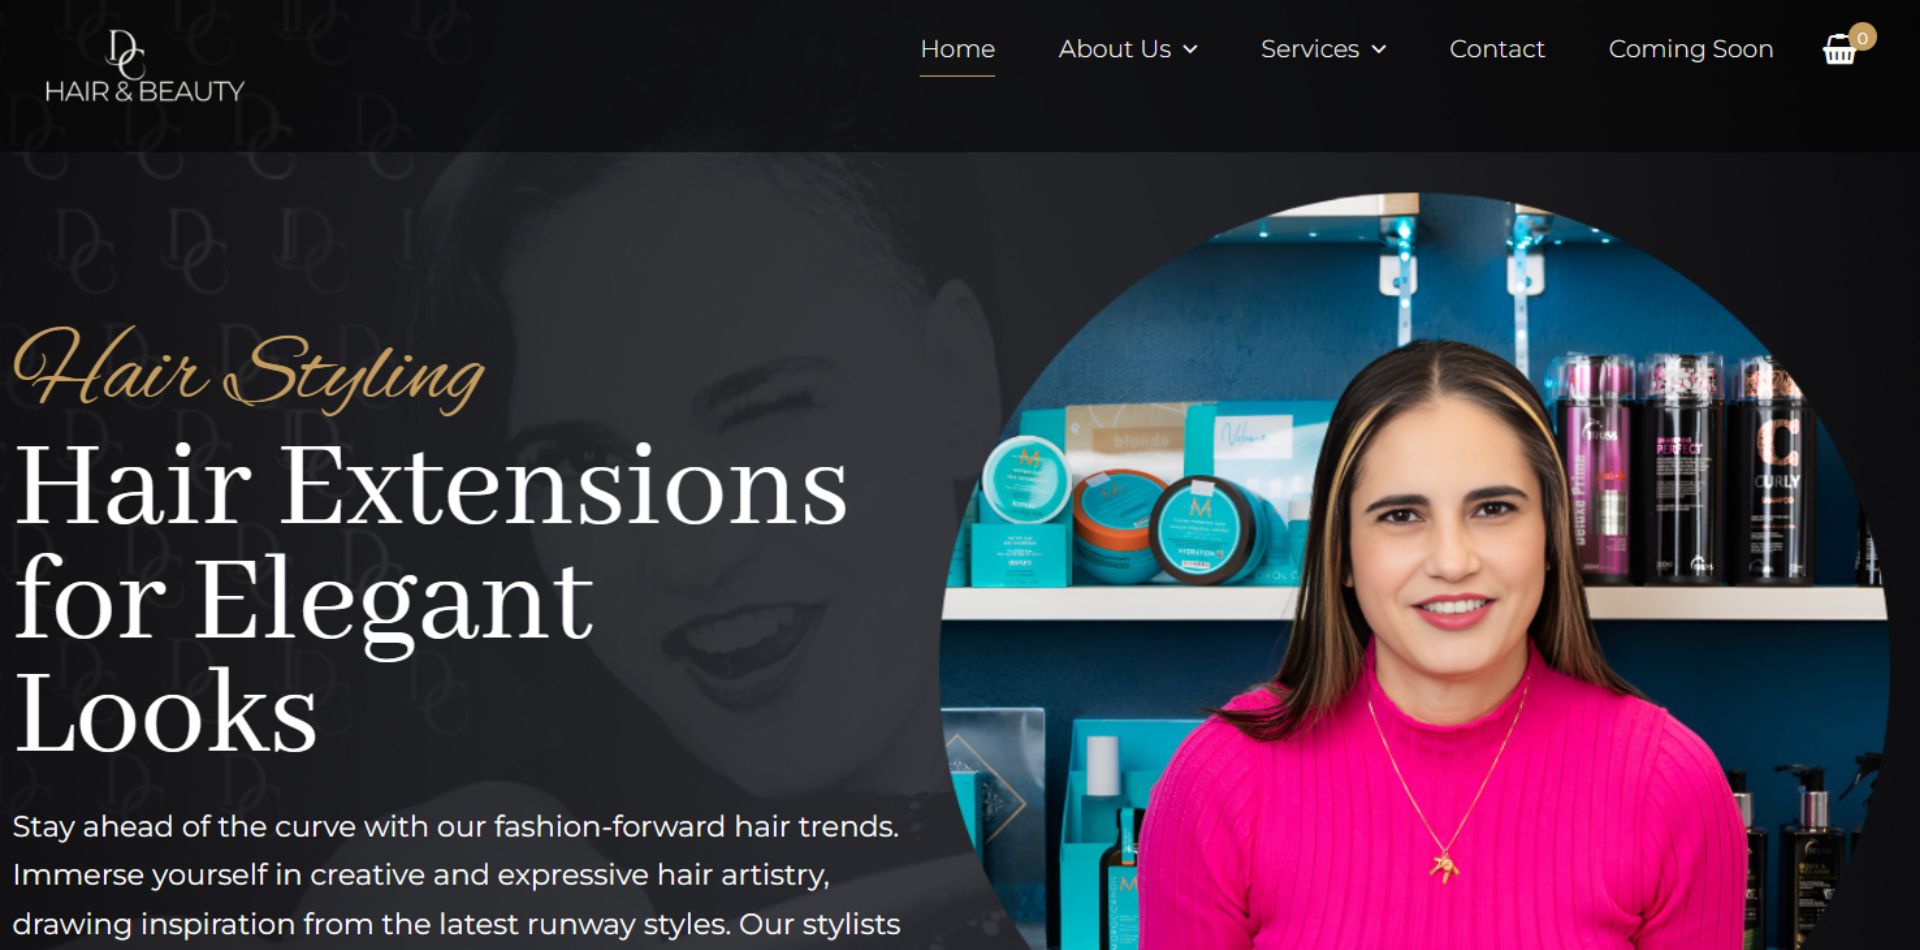 DC Hair & Beauty Website